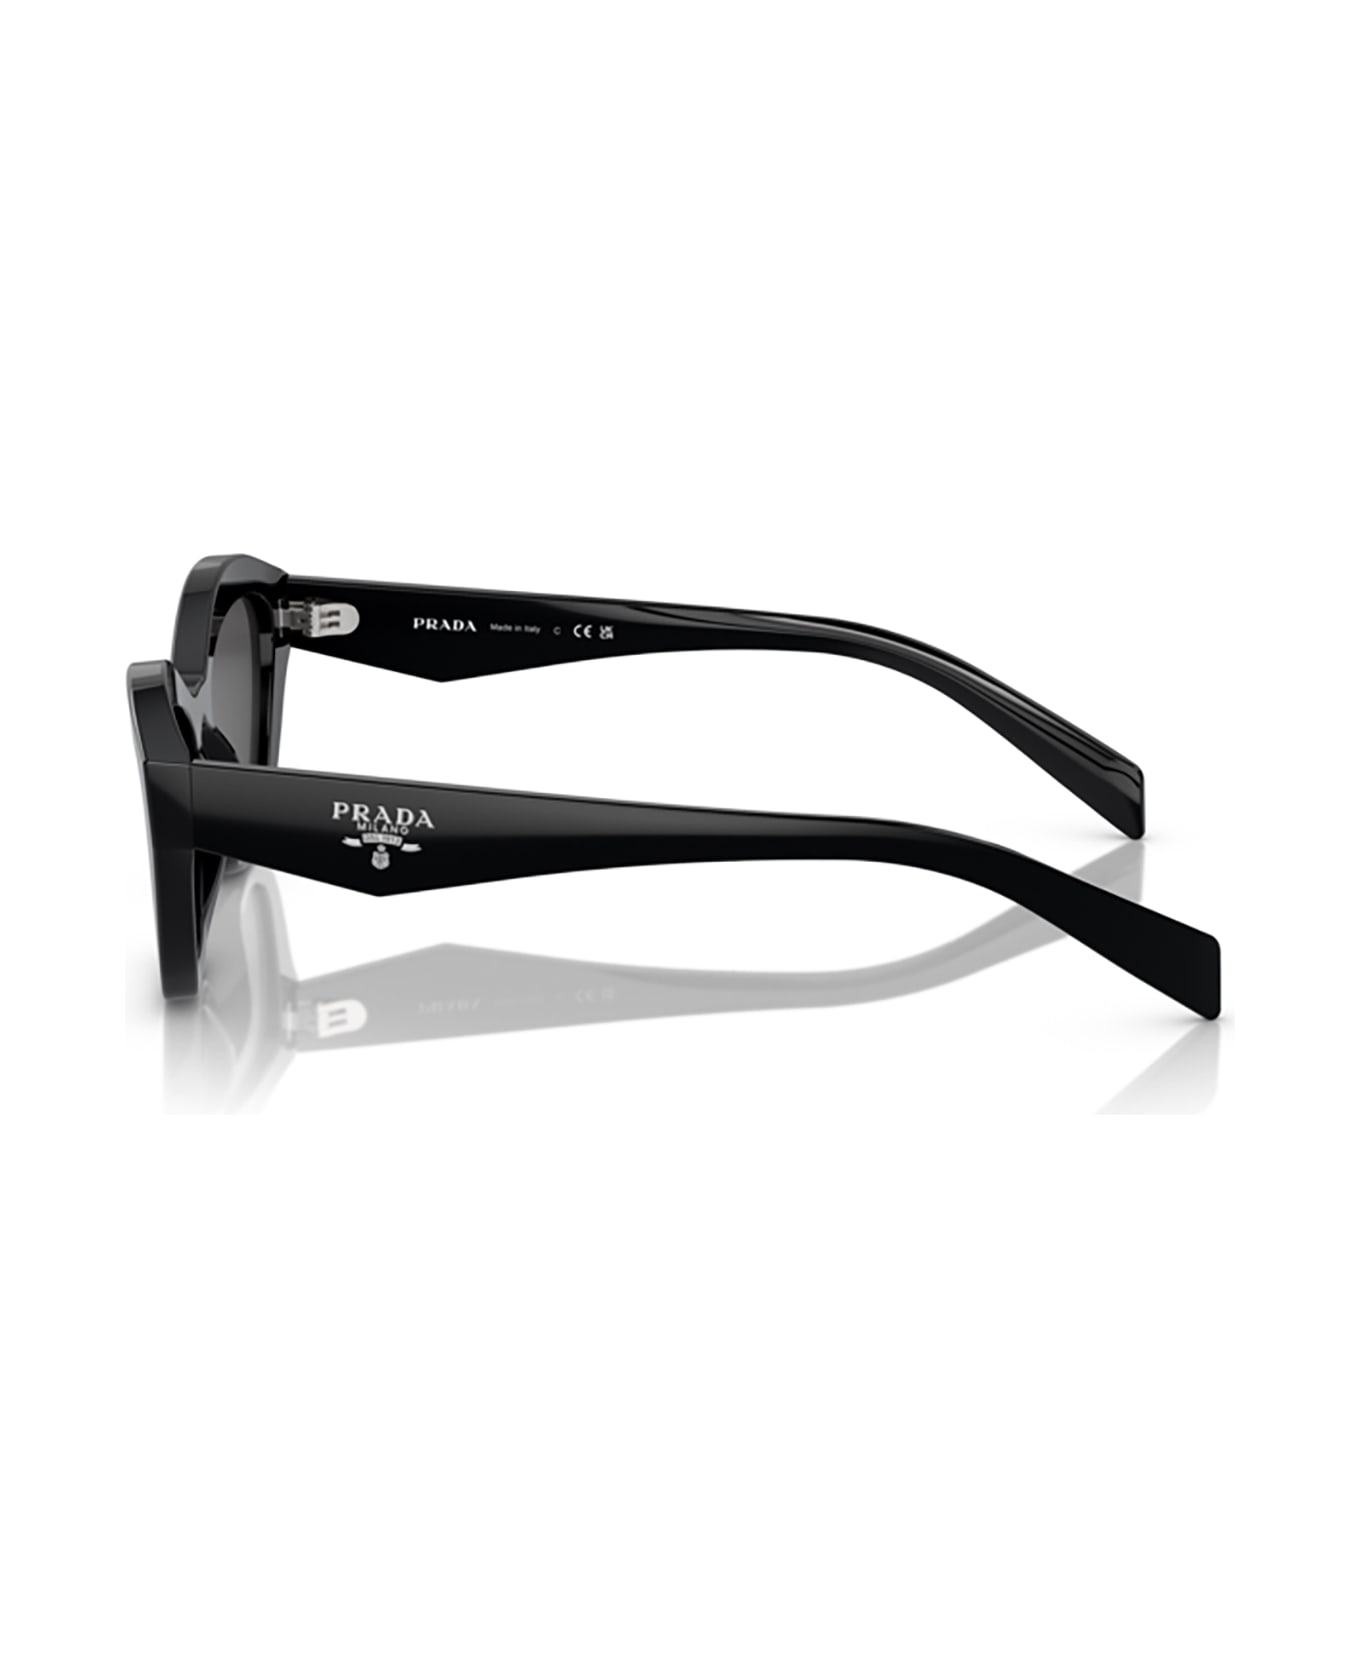 Prada Eyewear Pr A02s Black Sunglasses - Black サングラス